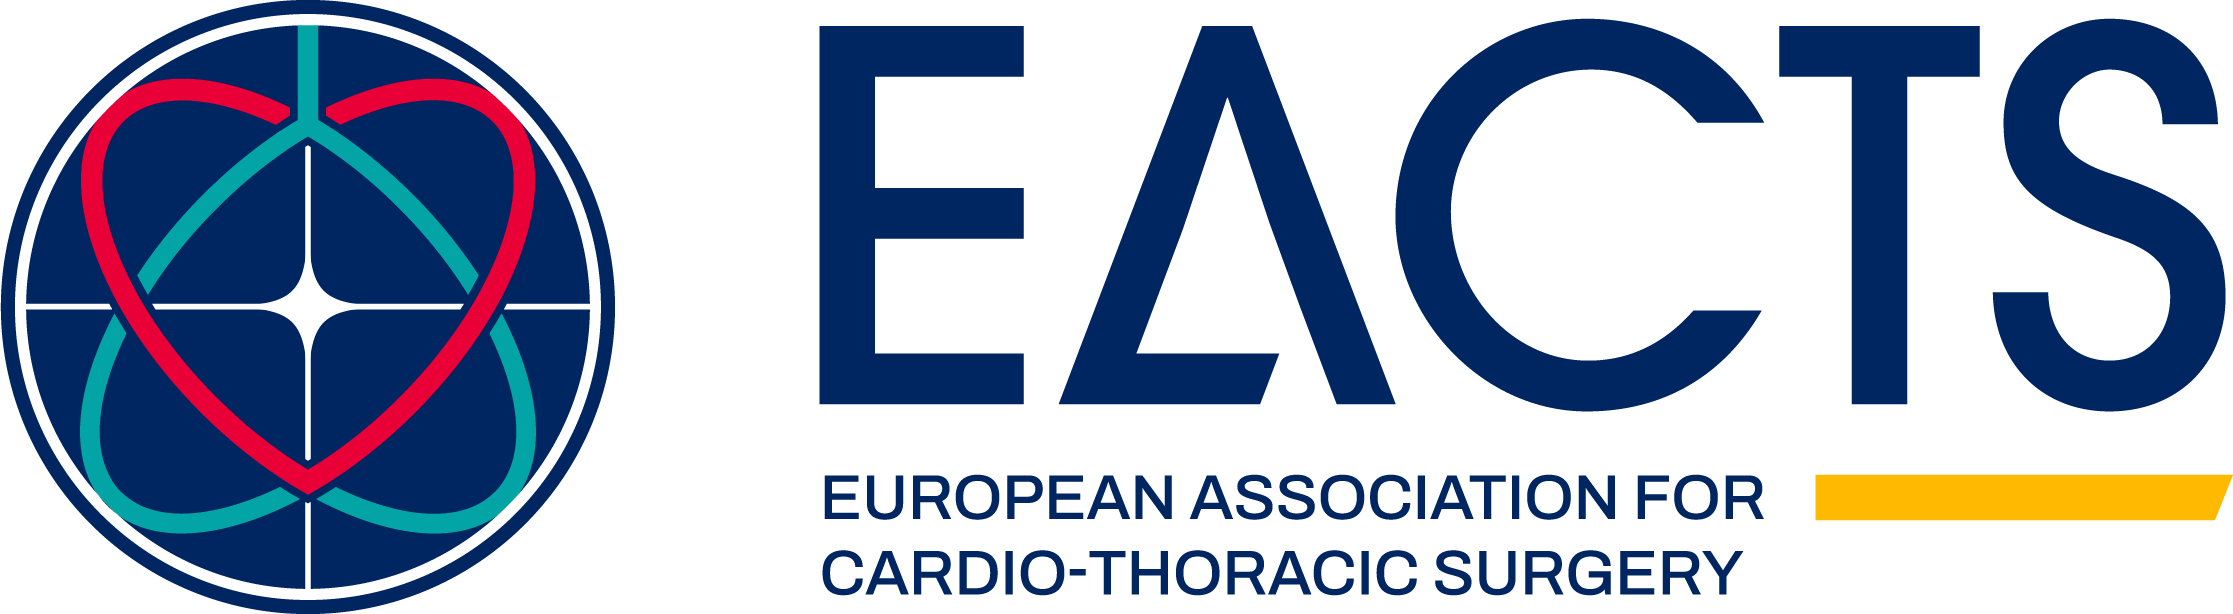 Logo EACTS (European Association for Cardio-Thoracic Surgery)